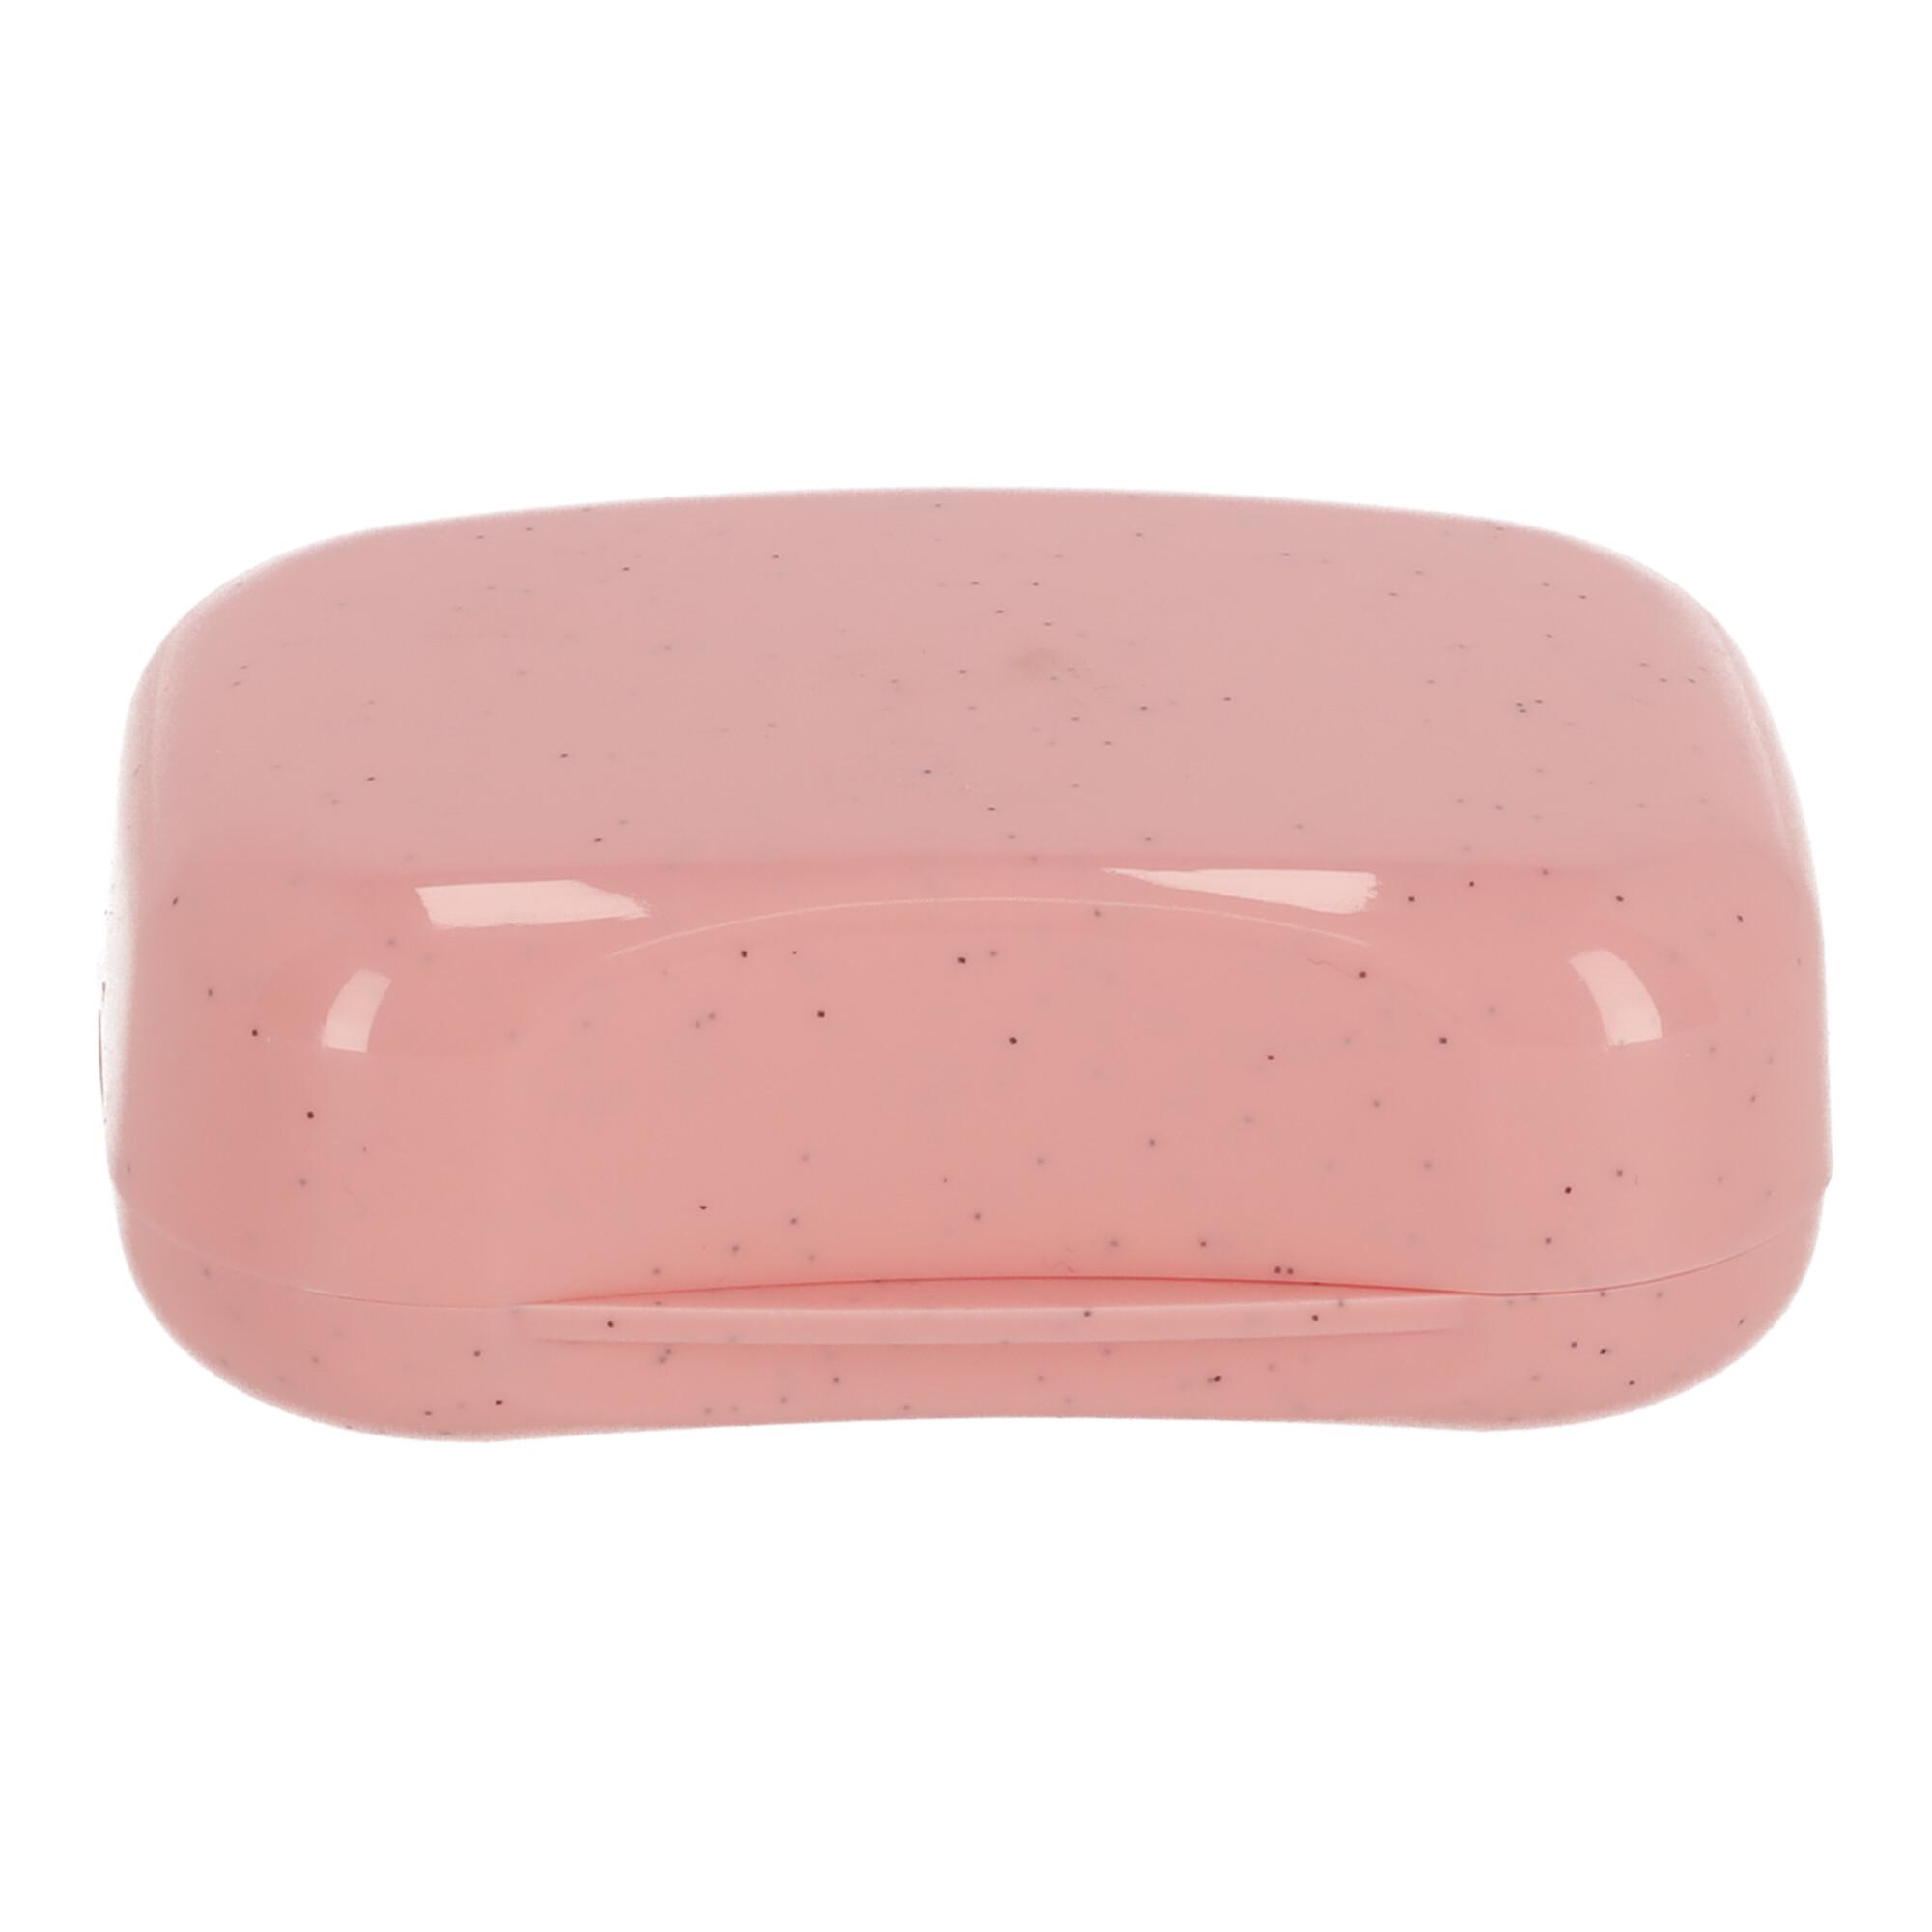 Tourist soap dish, closed plastic soap dish, type III - pink